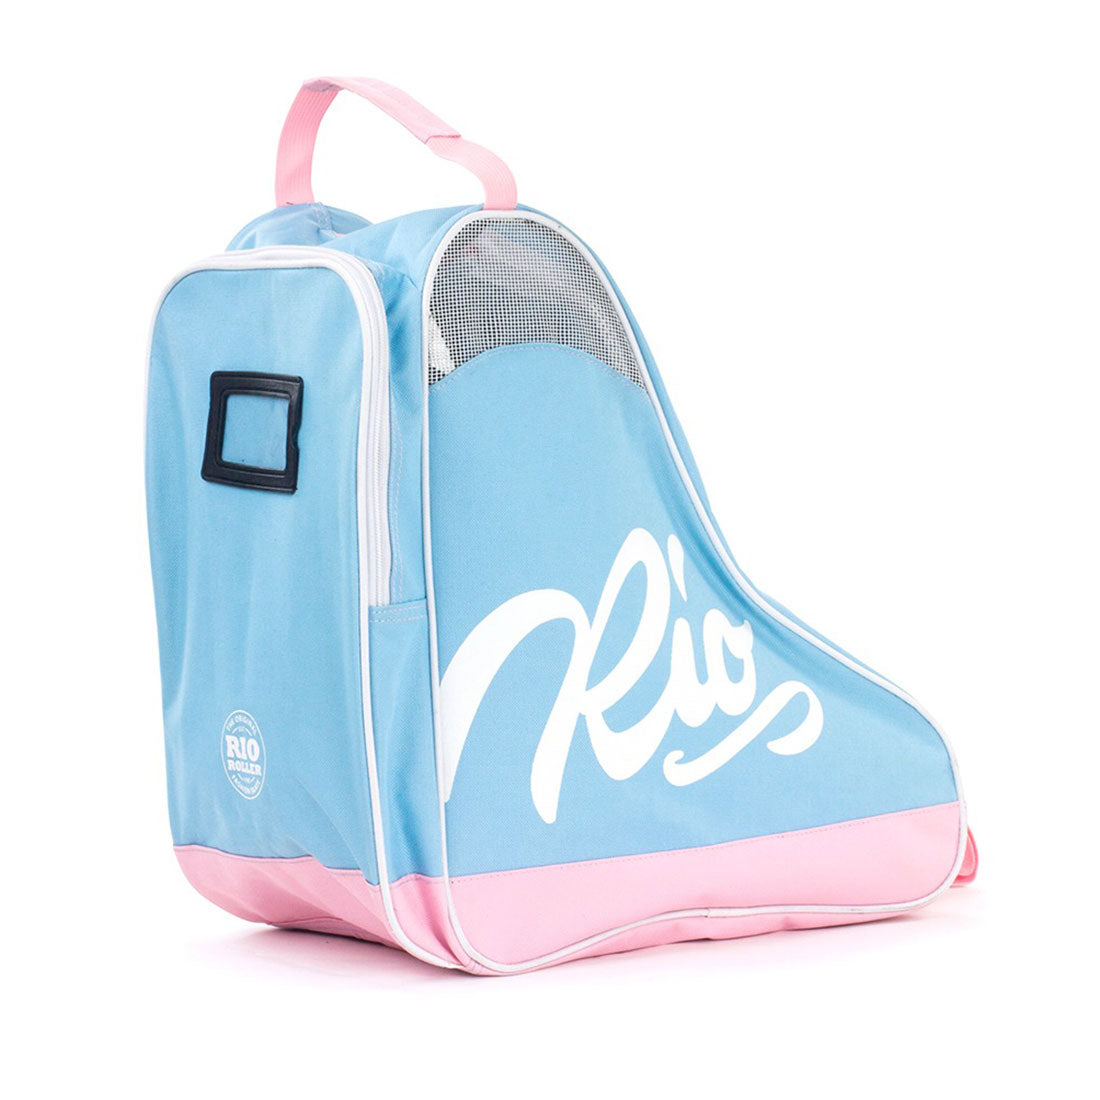 Rio Roller Script Skate Bag - Blue/Pink Bags and Backpacks